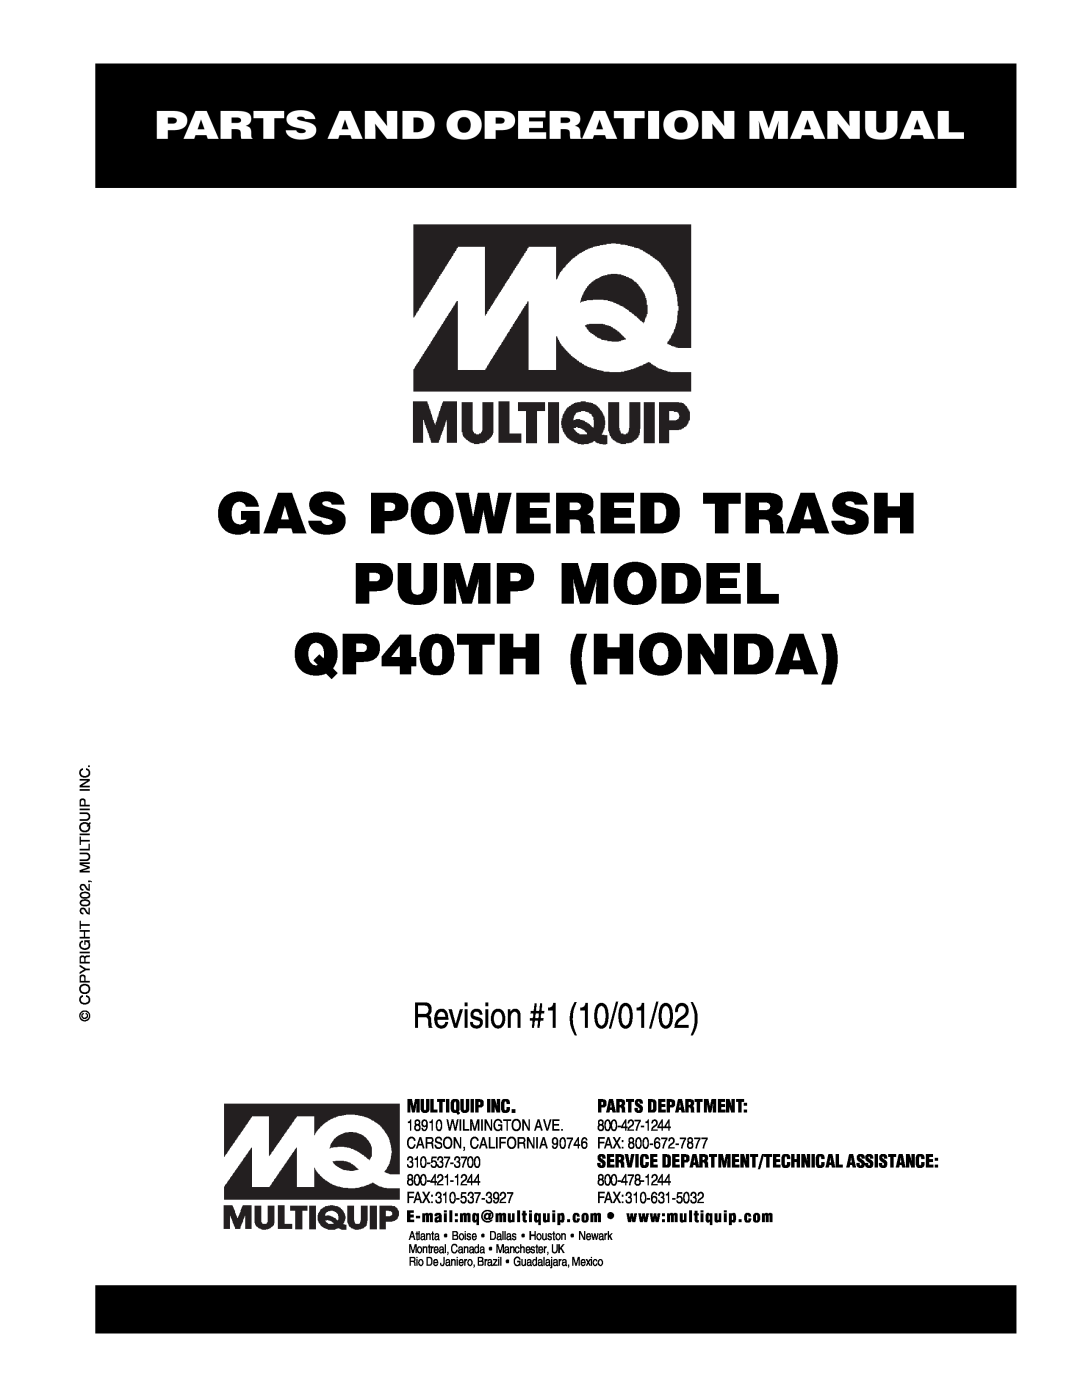 Multiquip operation manual GAS POWERED TRASH PUMP MODEL QP40TH HONDA, Revision #1 10/01/02, Multiquip Inc 